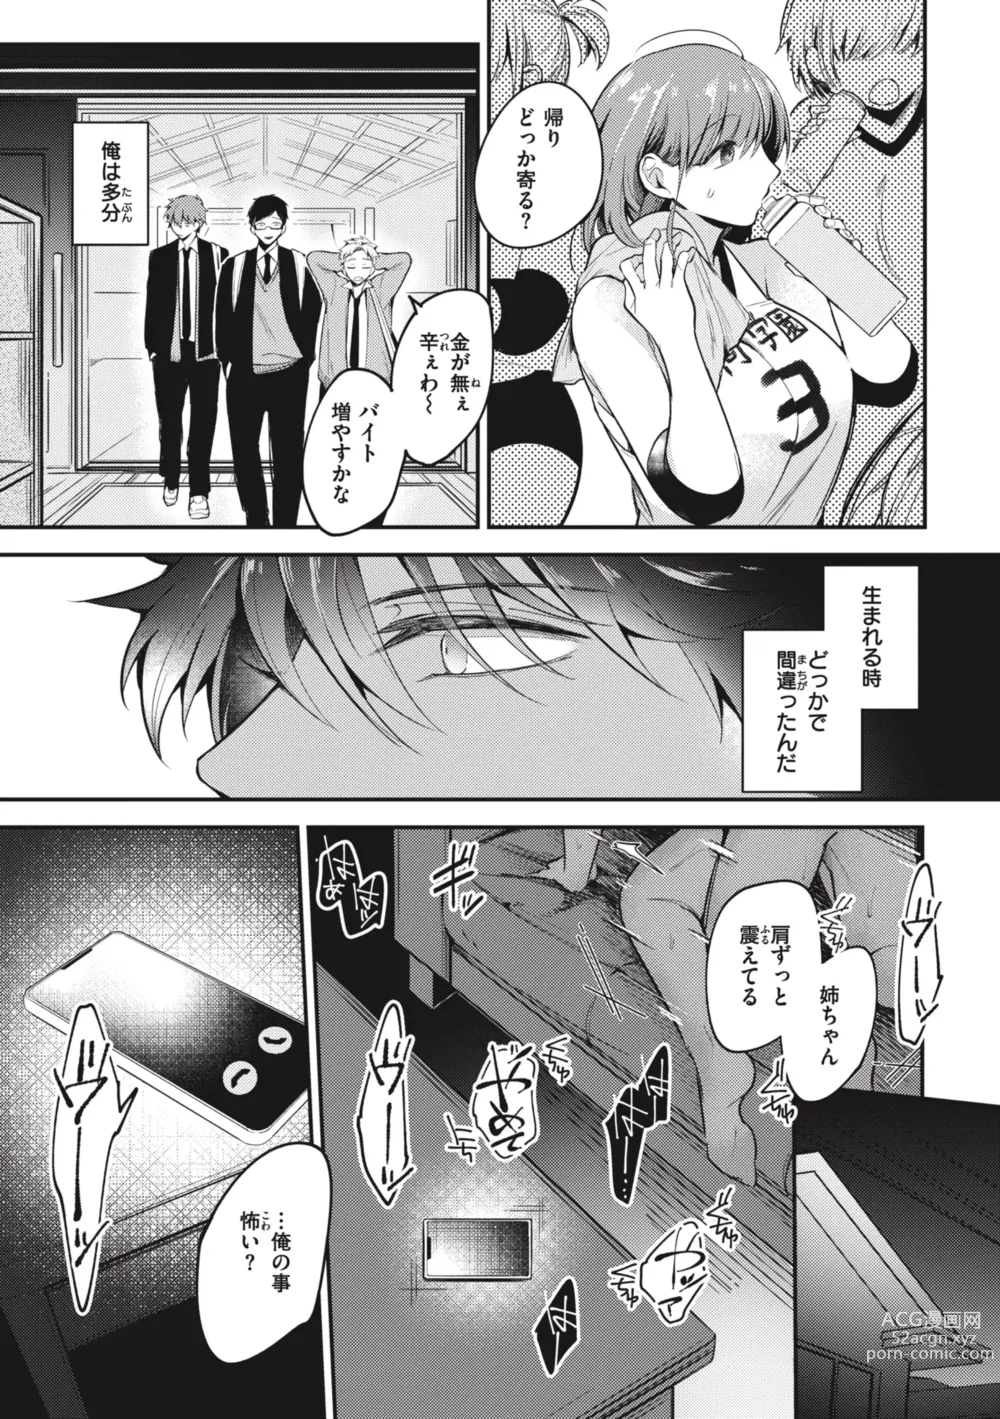 Page 7 of manga Tairo Naki Netsu